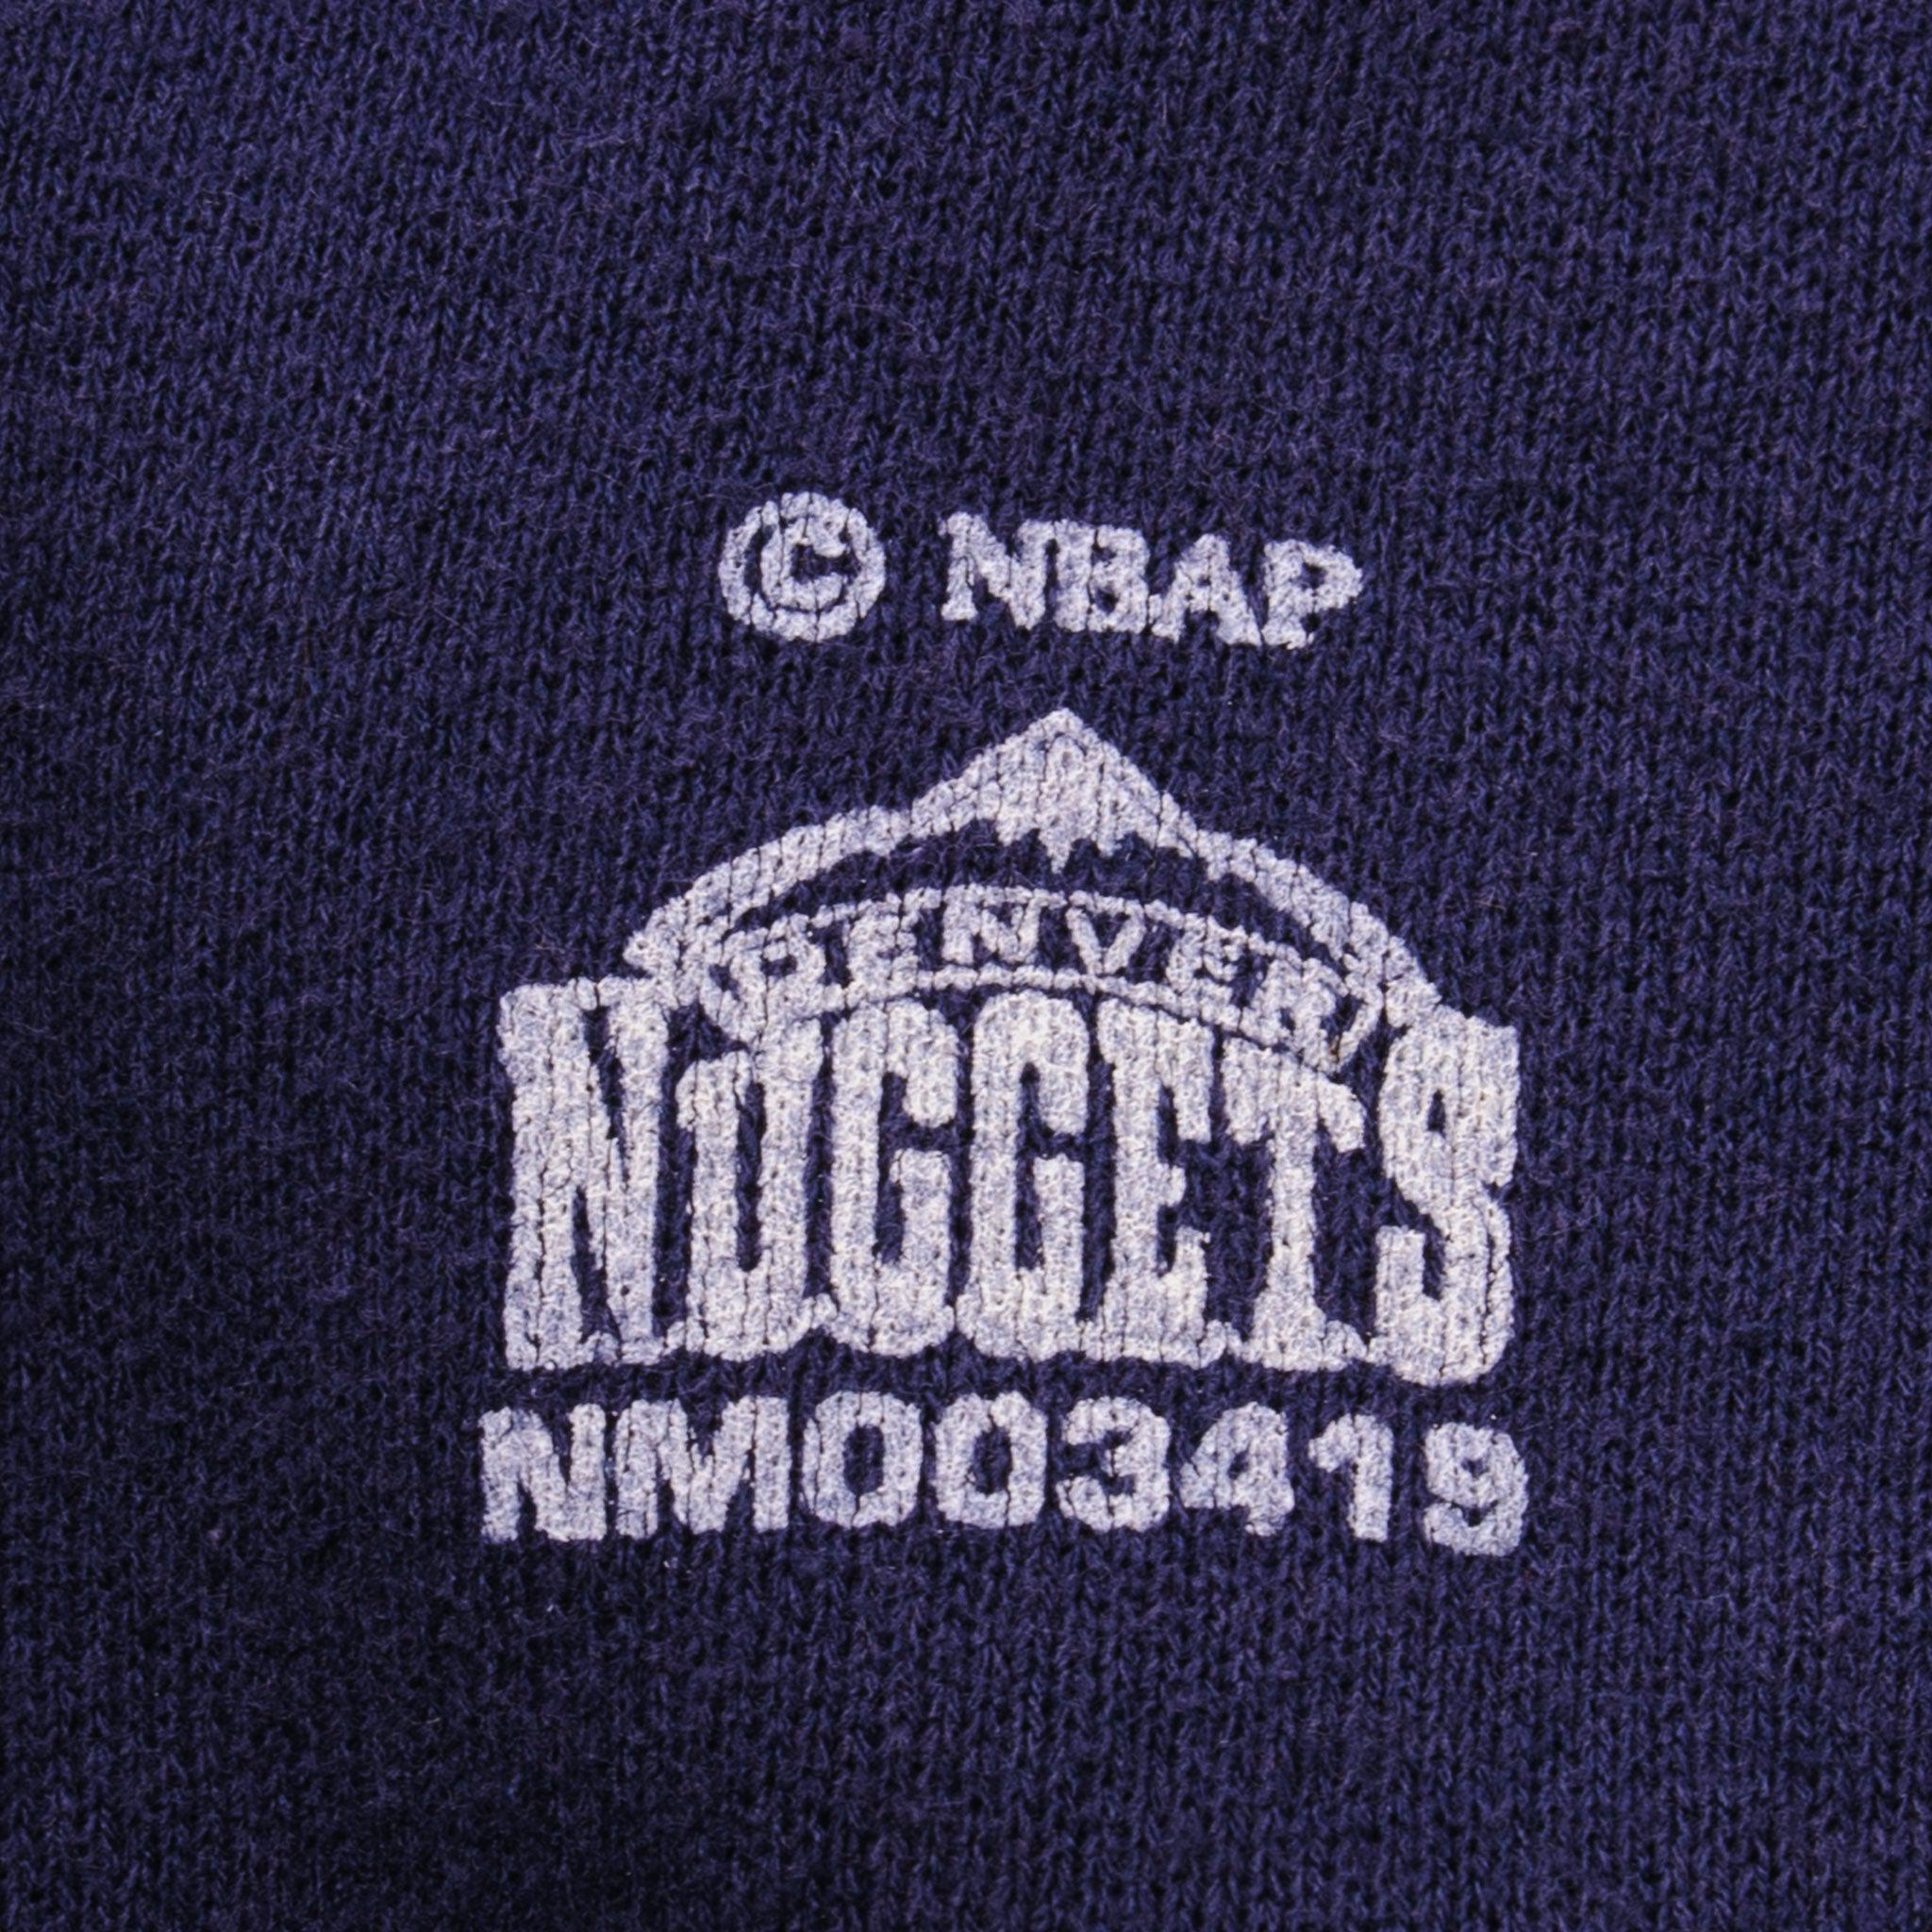 90s NBA Denver Nuggets Tshirt Hoodie Crewneck Sweatshirt Reprinted Full  Color Full Size Gifts for NBA Fans - Bluefink